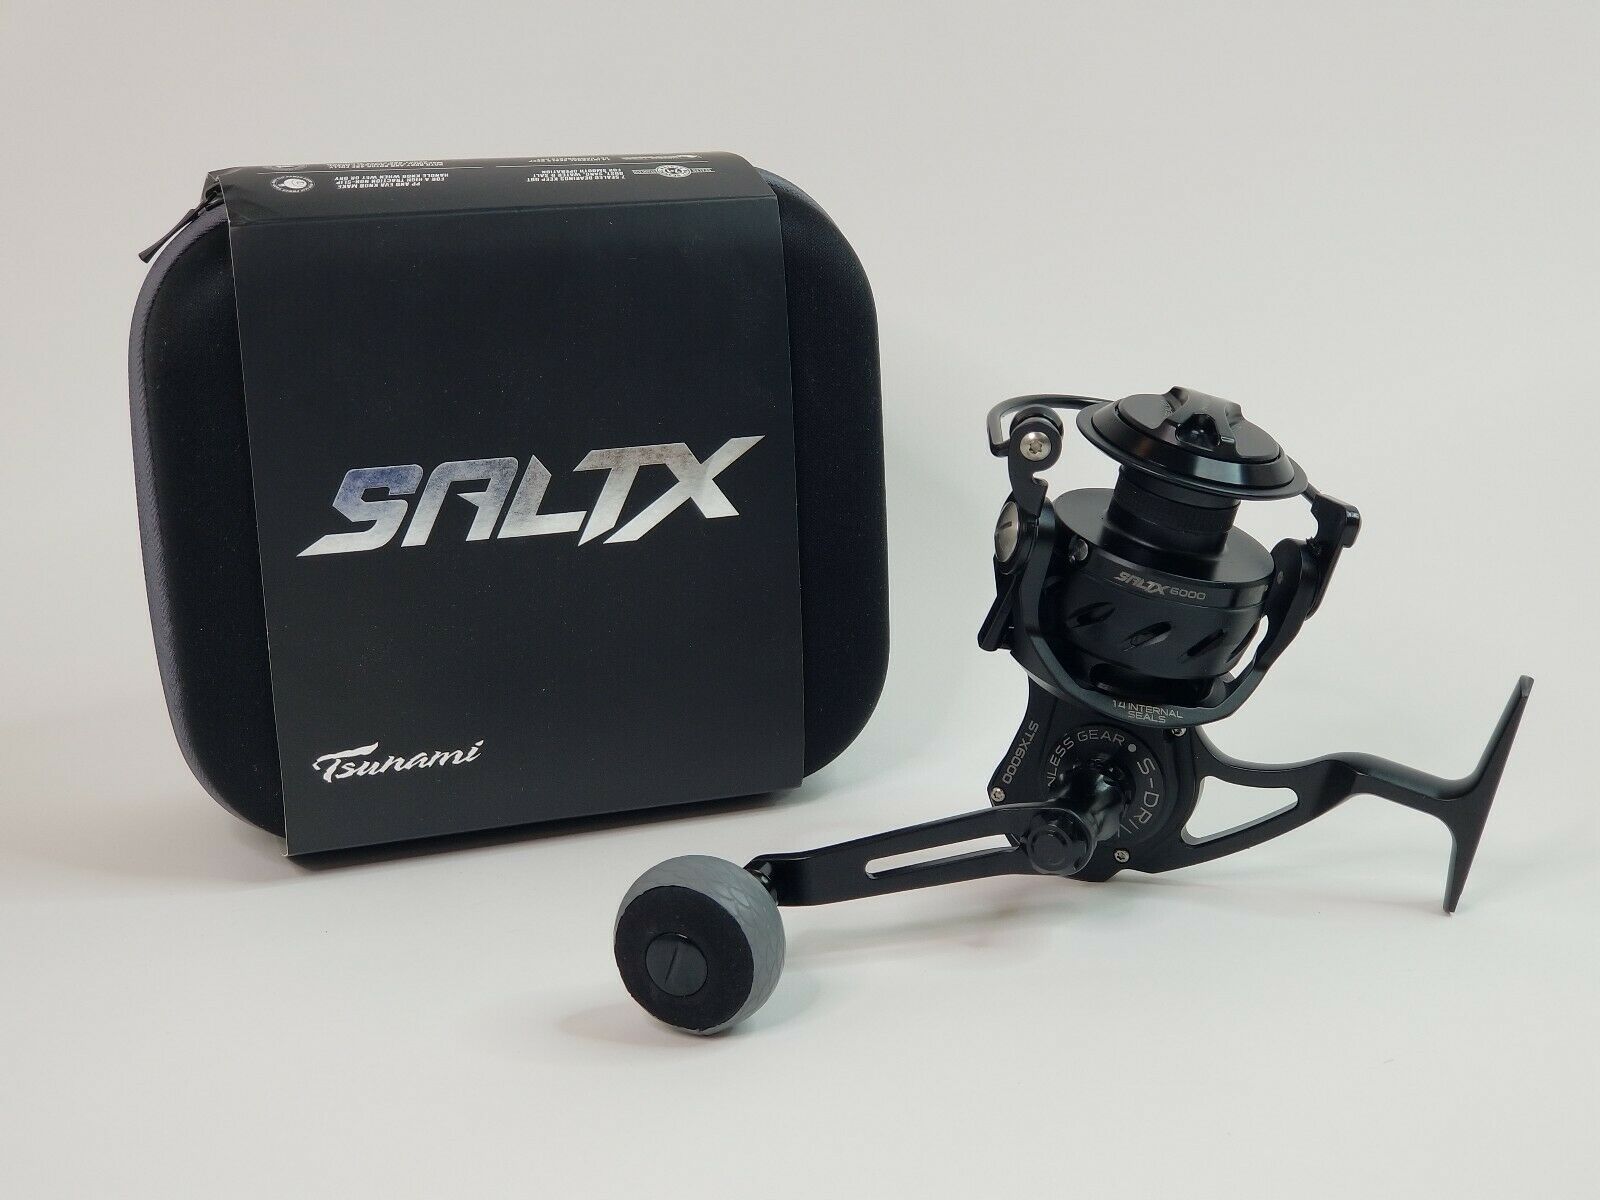 SaltX Spinning Reel Black - Tsunami STX6000